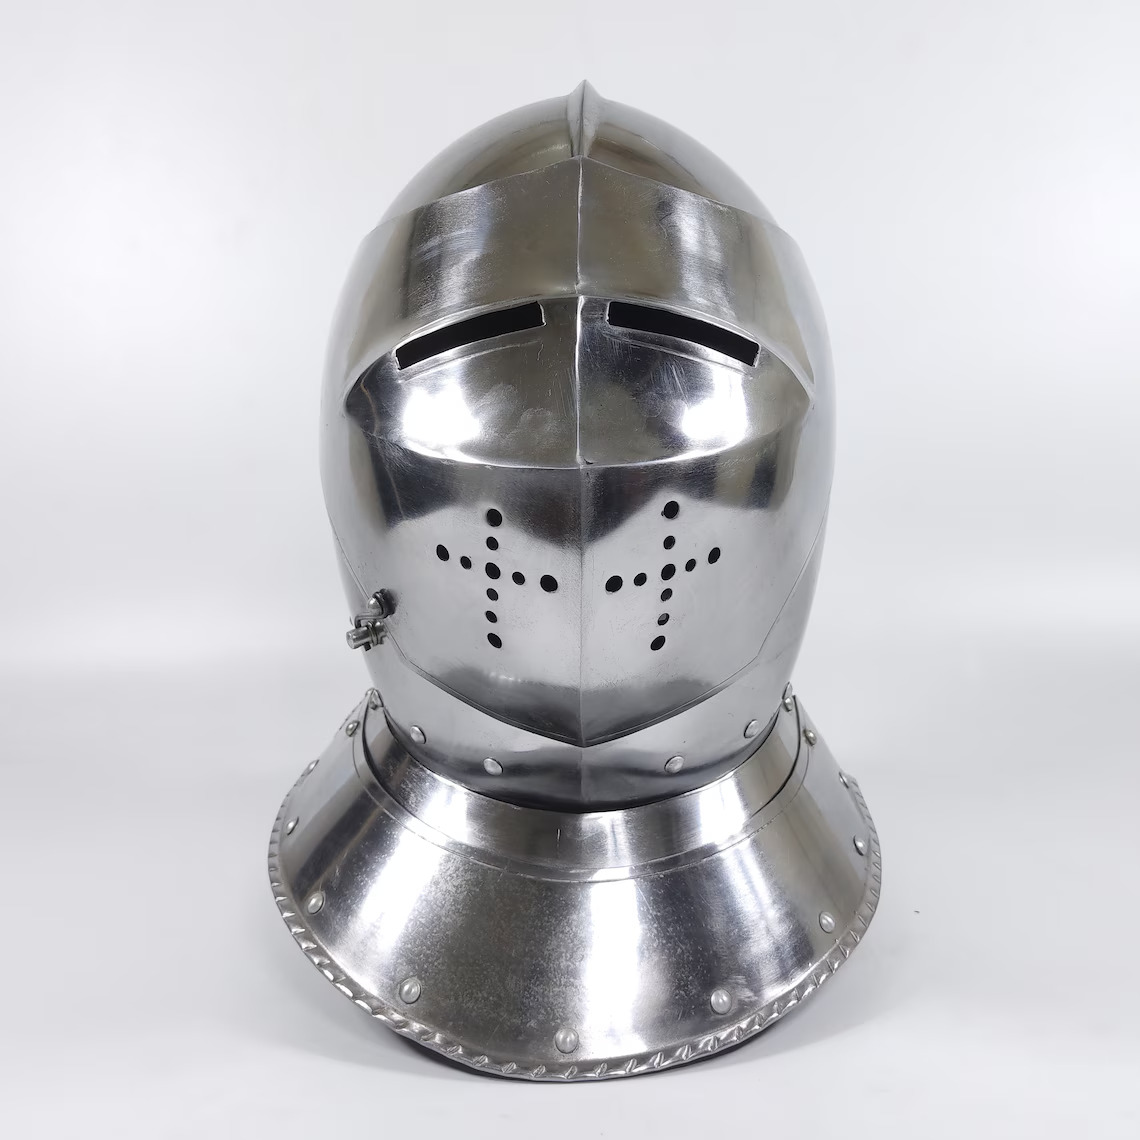 European Closed Helmet - Medieval Knight Helmet - Larp Fancy armor Costume dress